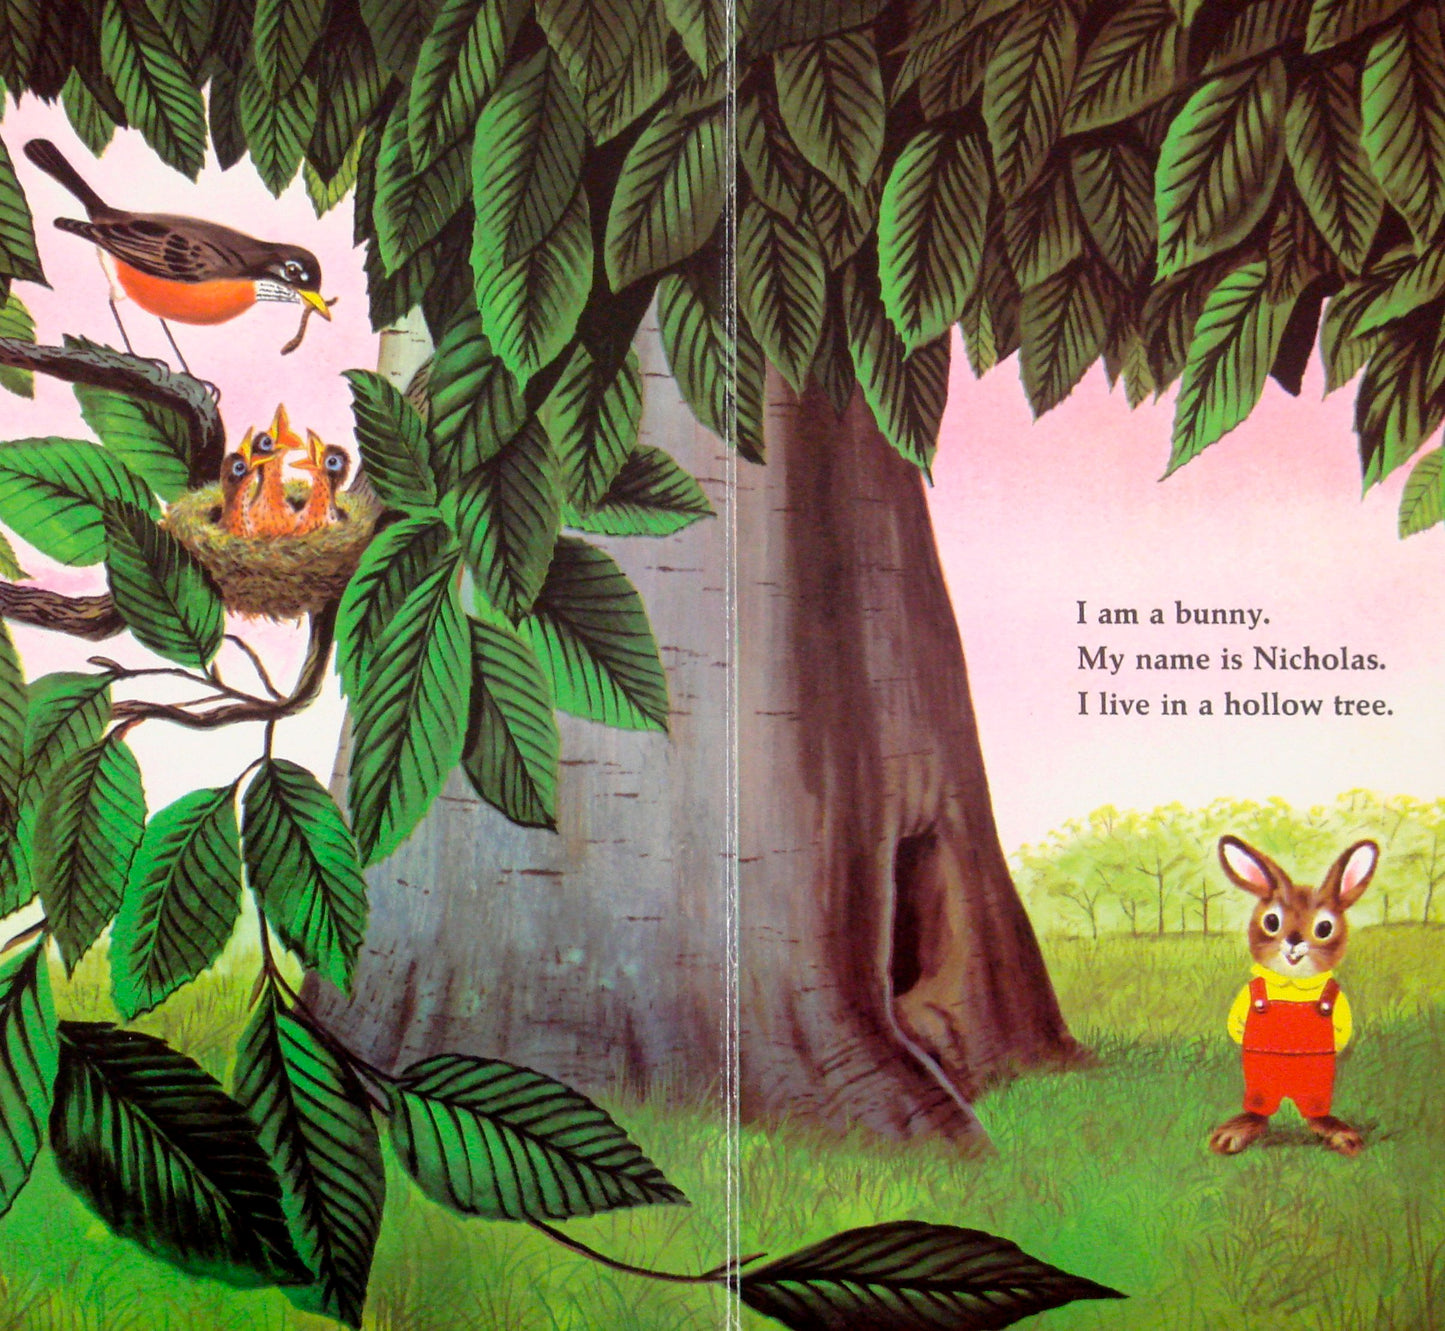 I Am A Bunny Board Book by Ole Risom